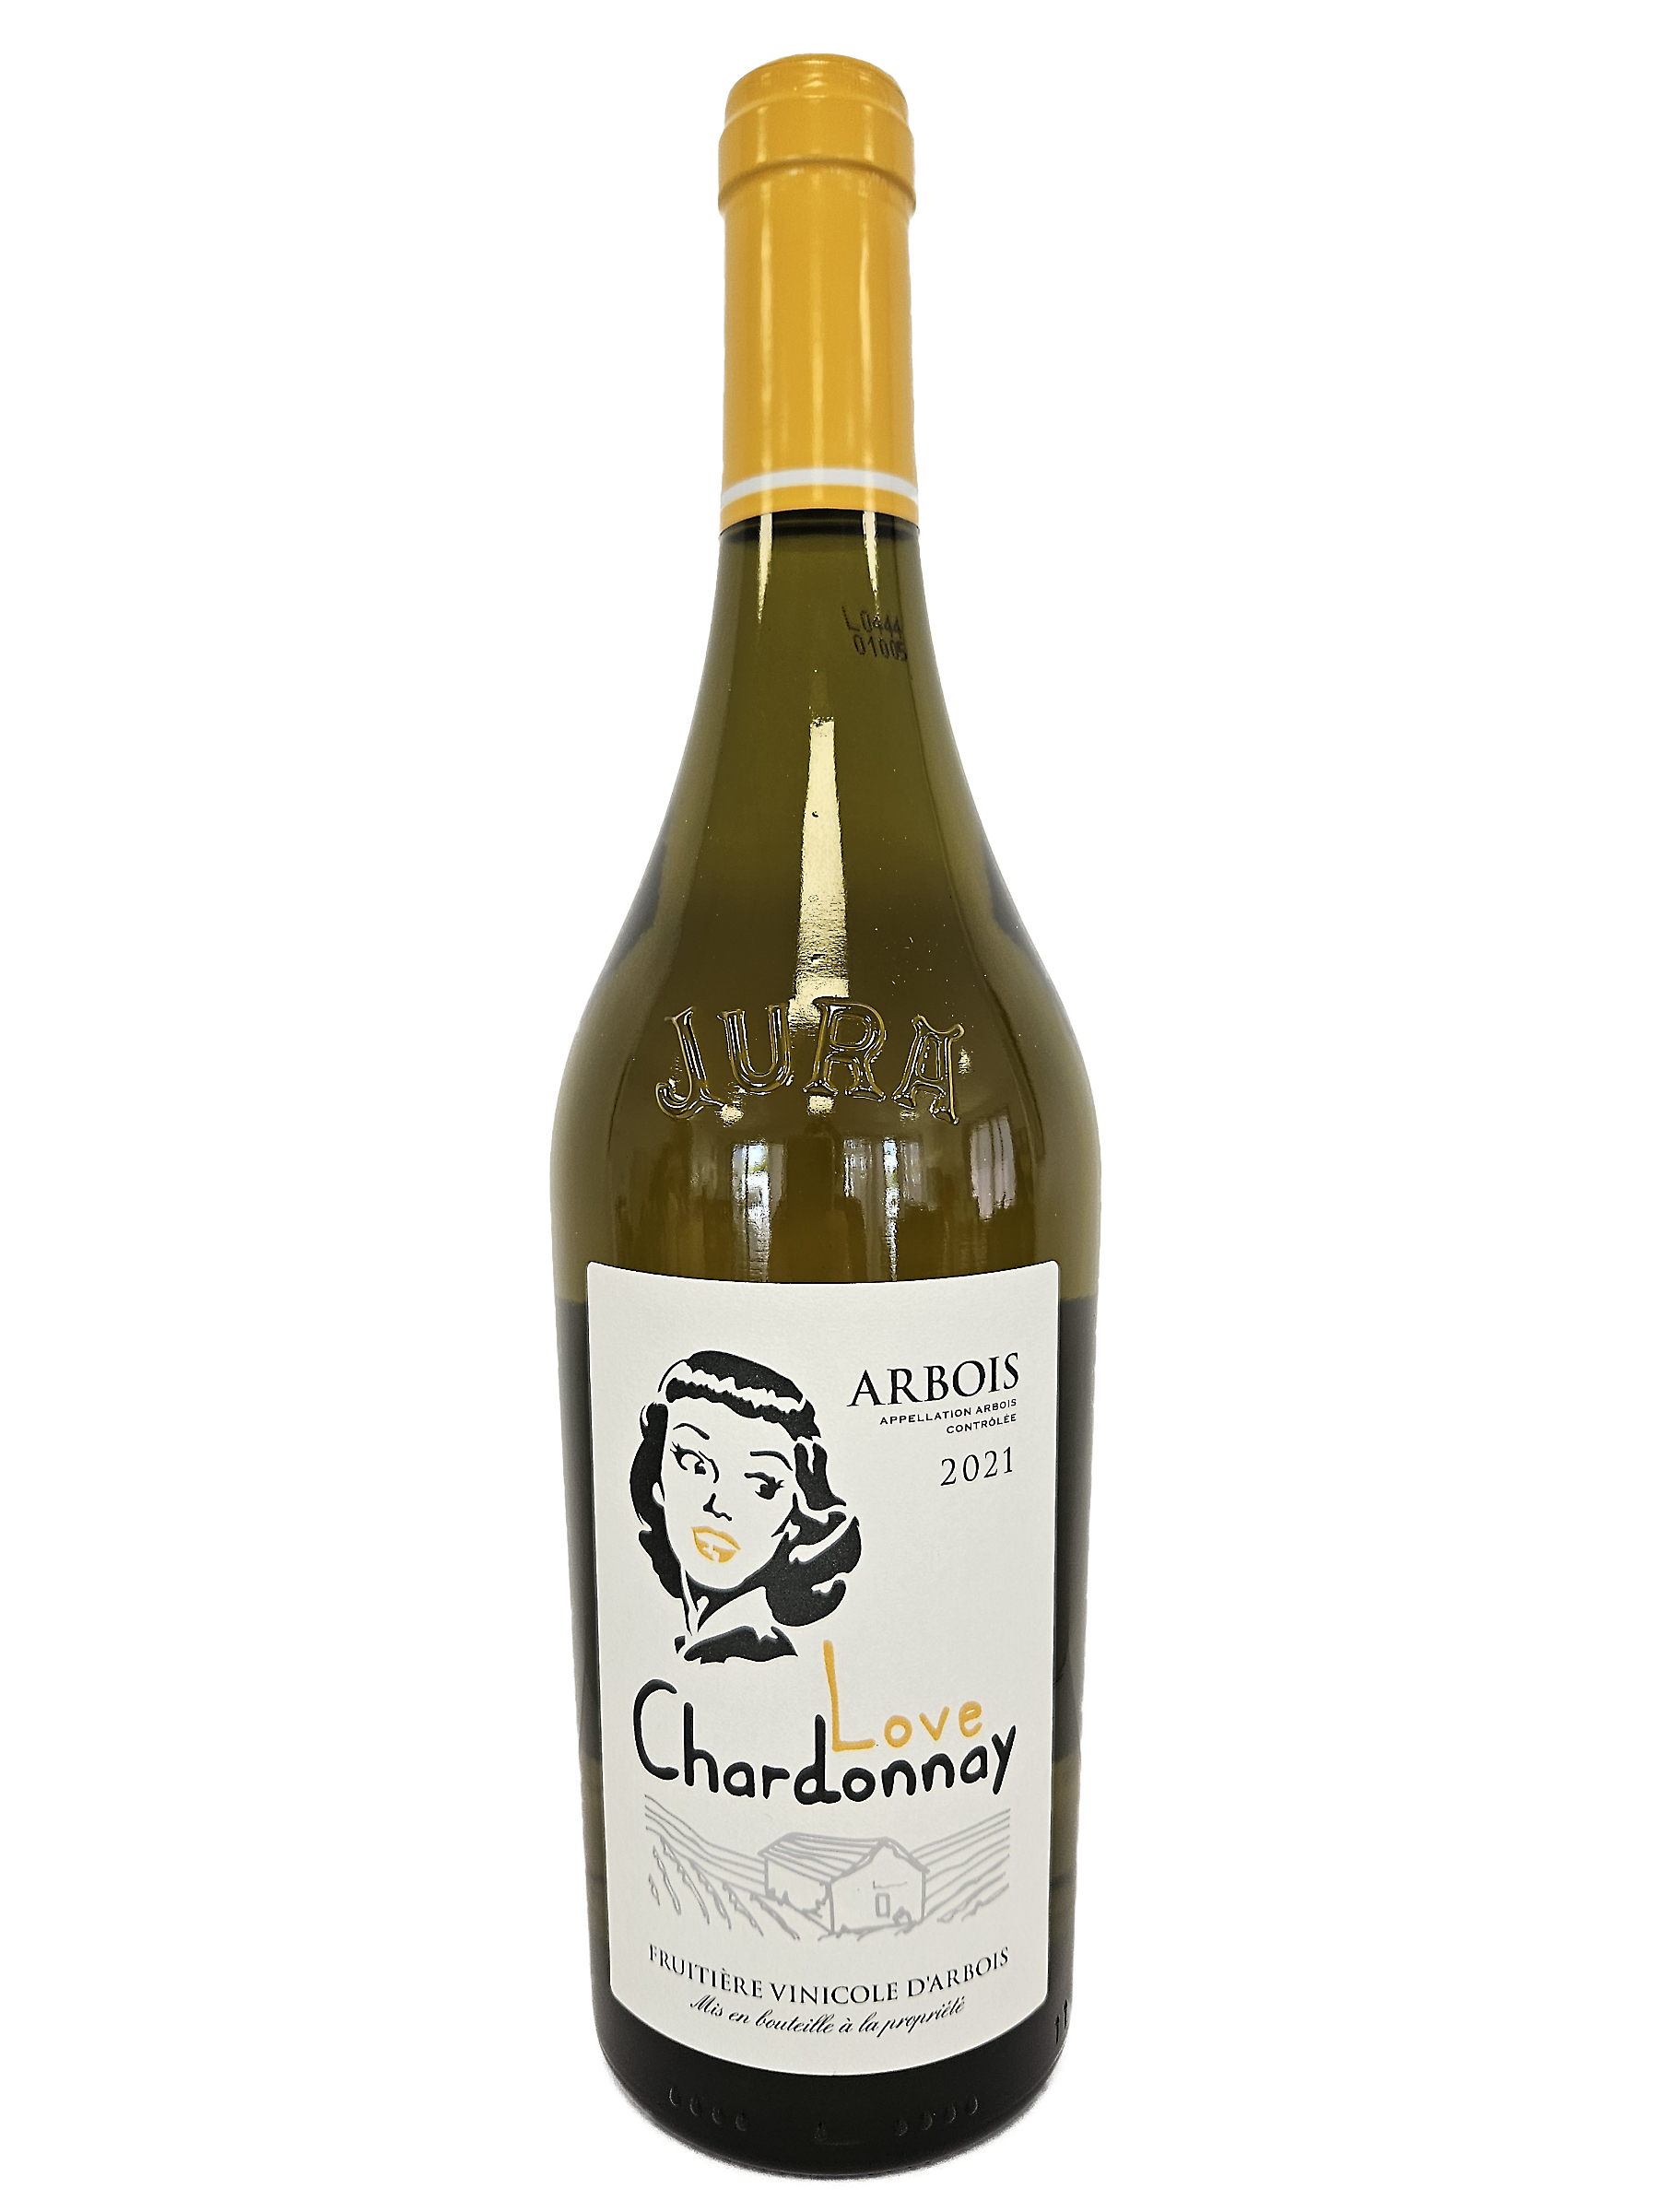 Fruitiere vinicole - juras - love chardonnay blanc